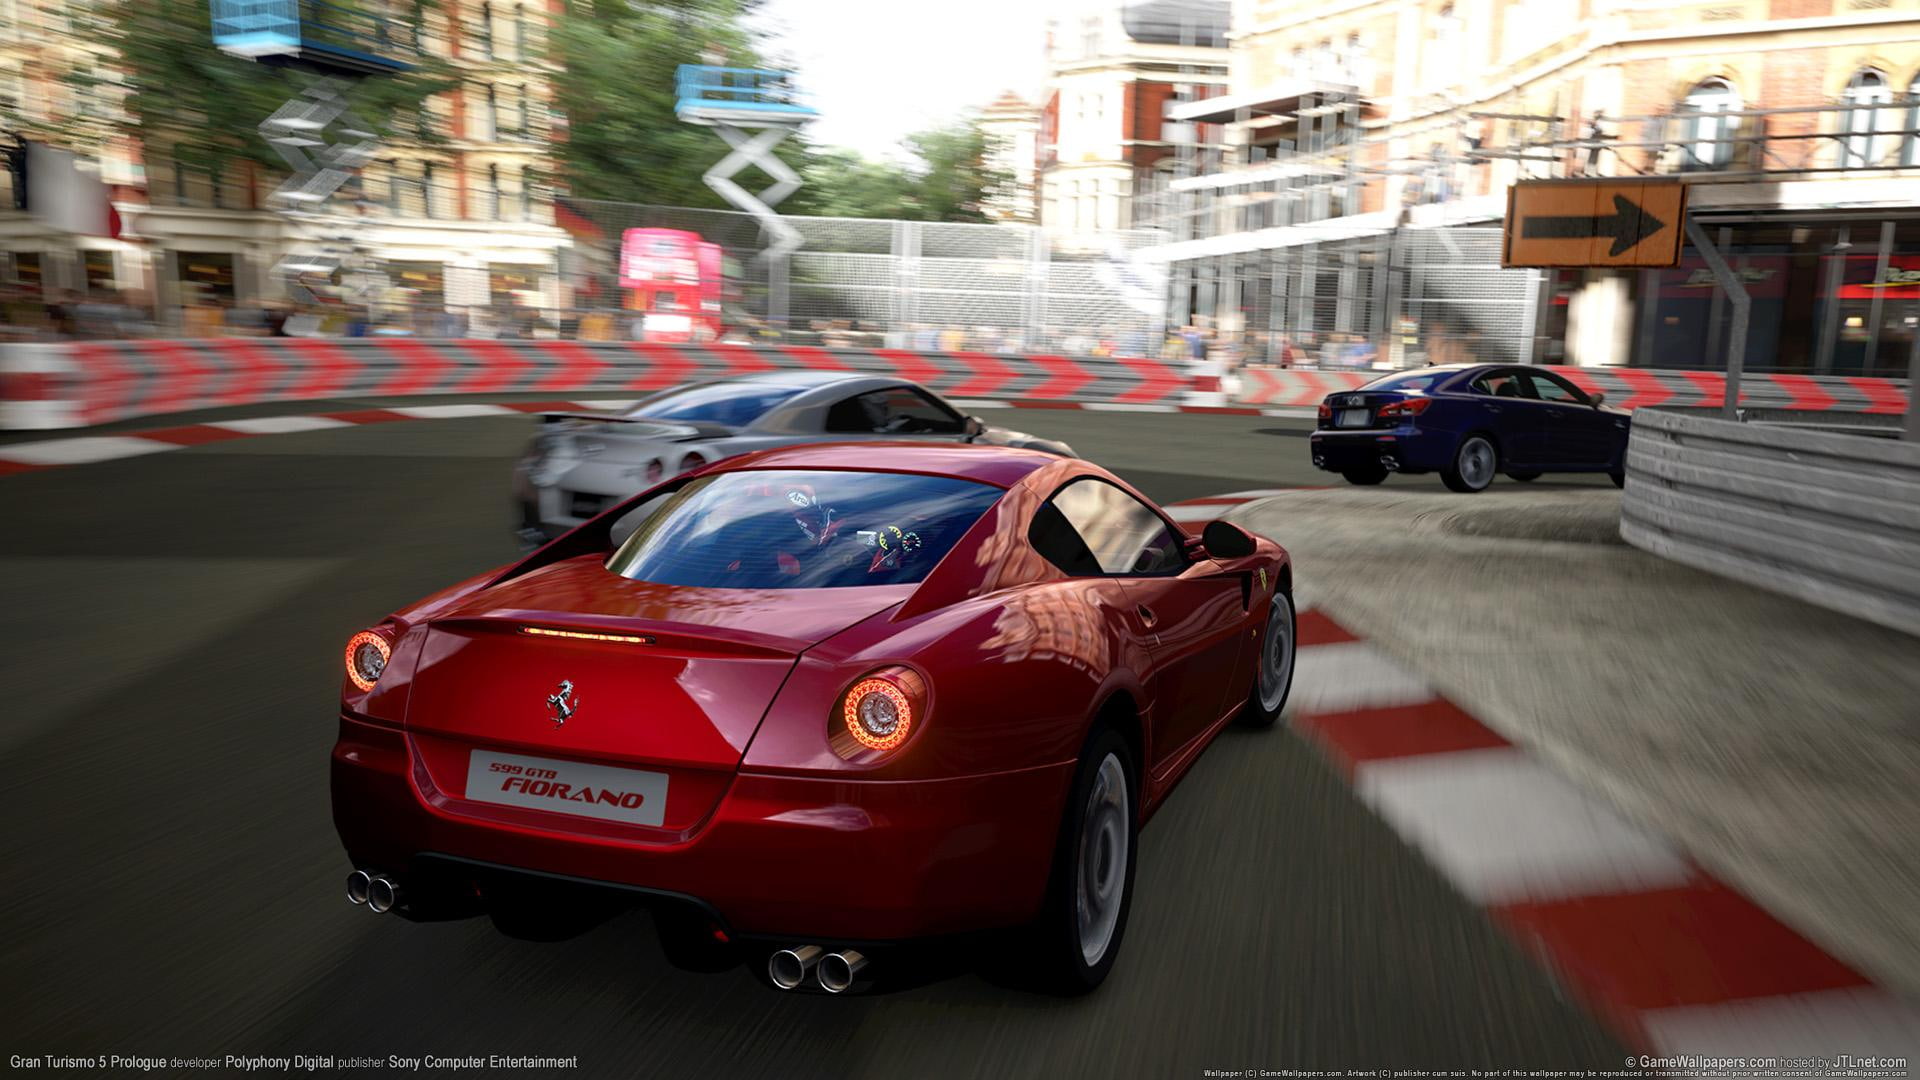 Gran Turismo 5 Prologue, games